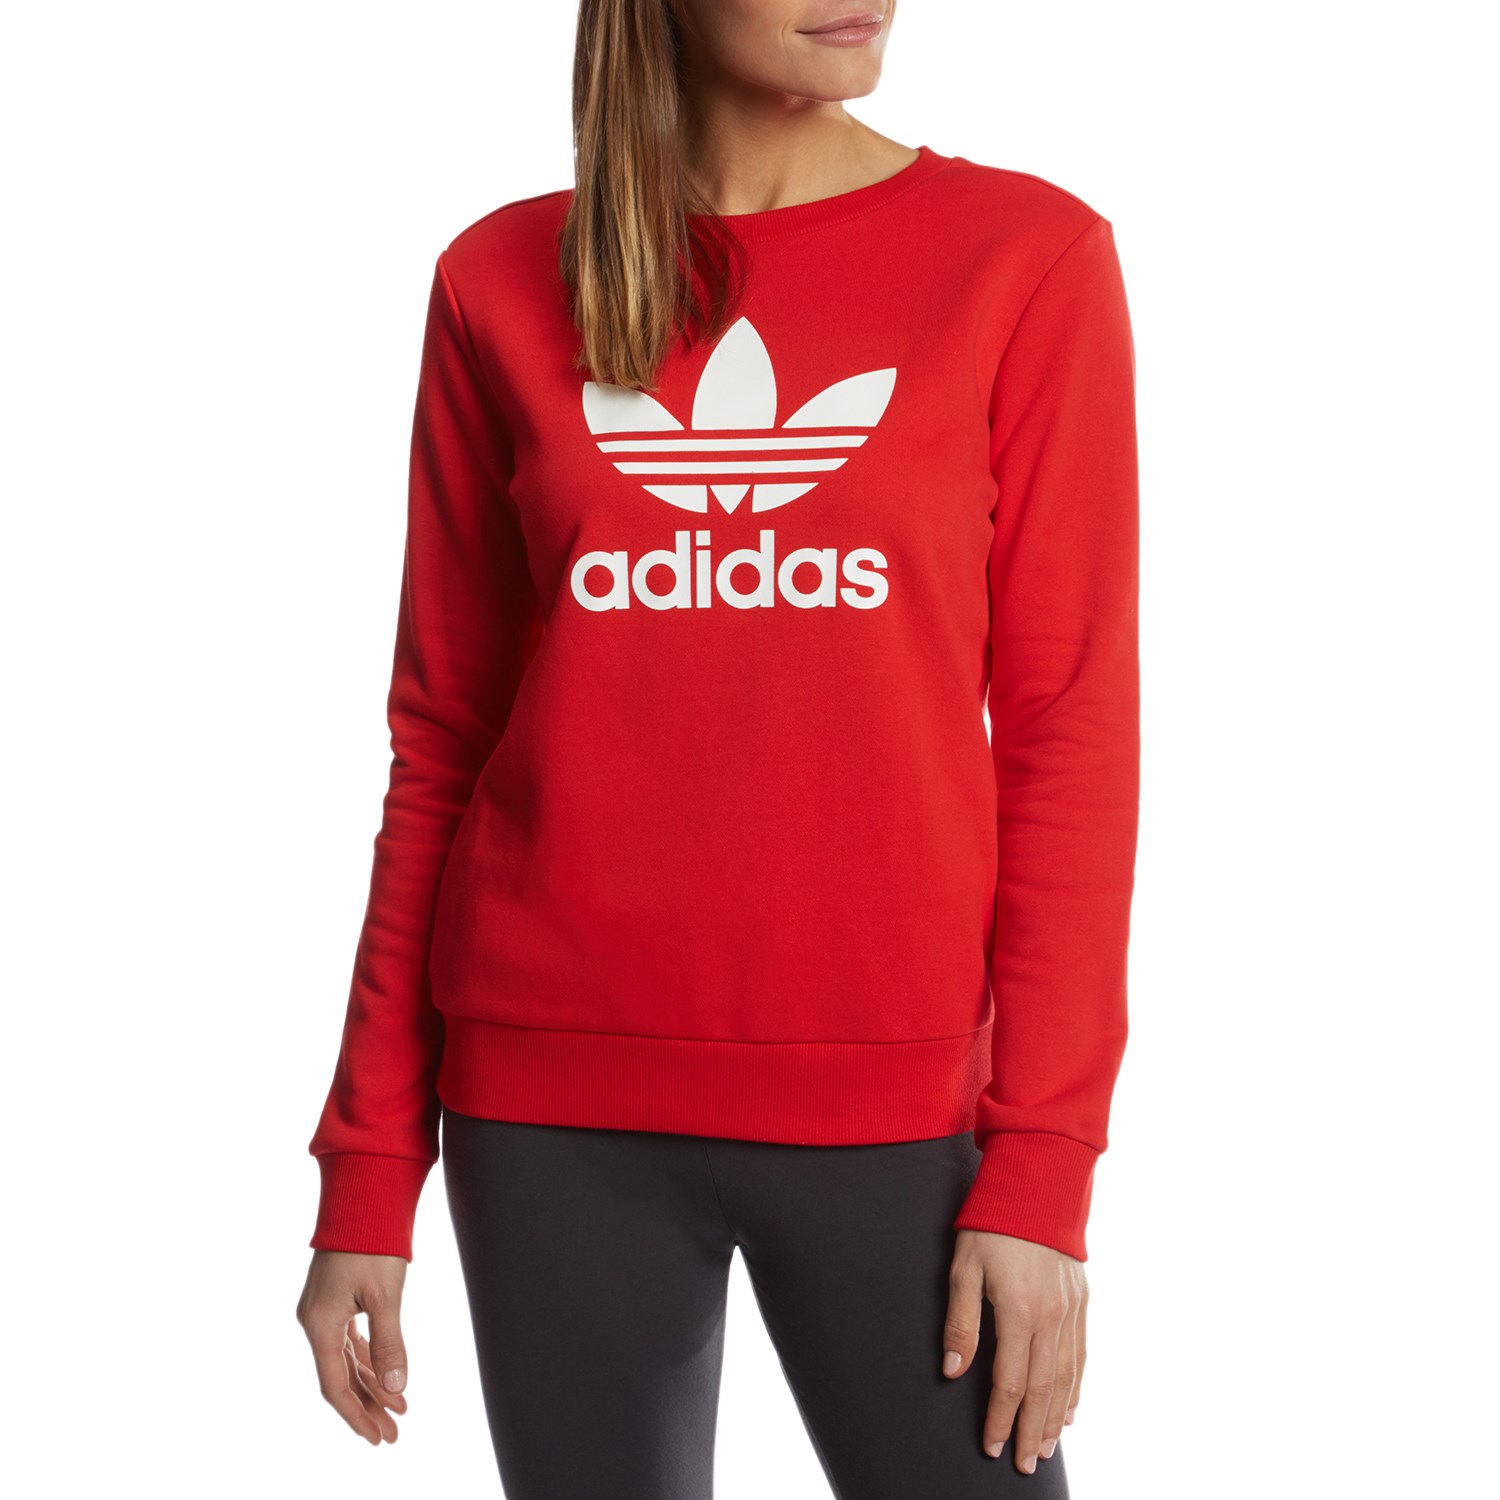 womens red adidas sweatshirt